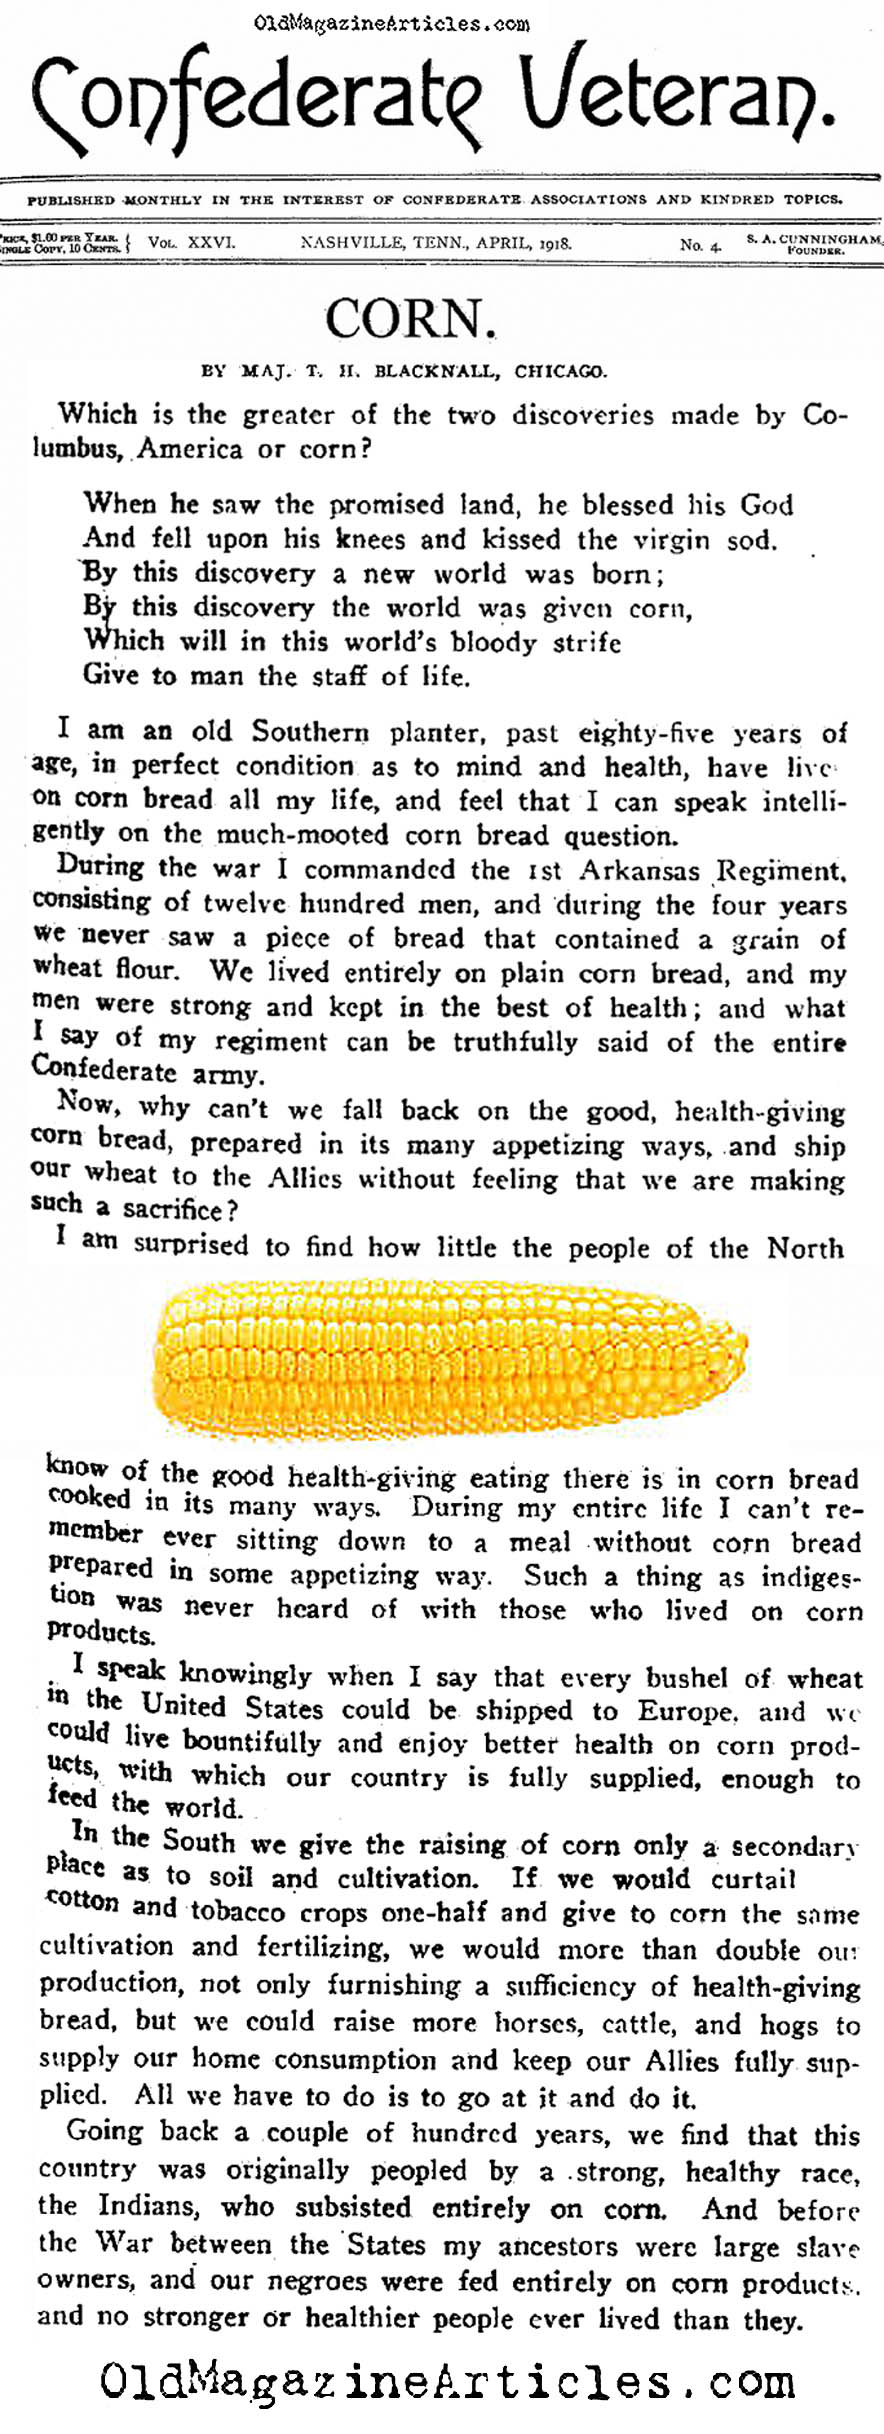 Corn and the 1st Arkansas Regiment (Confederate Veteran Magazine, 1918)